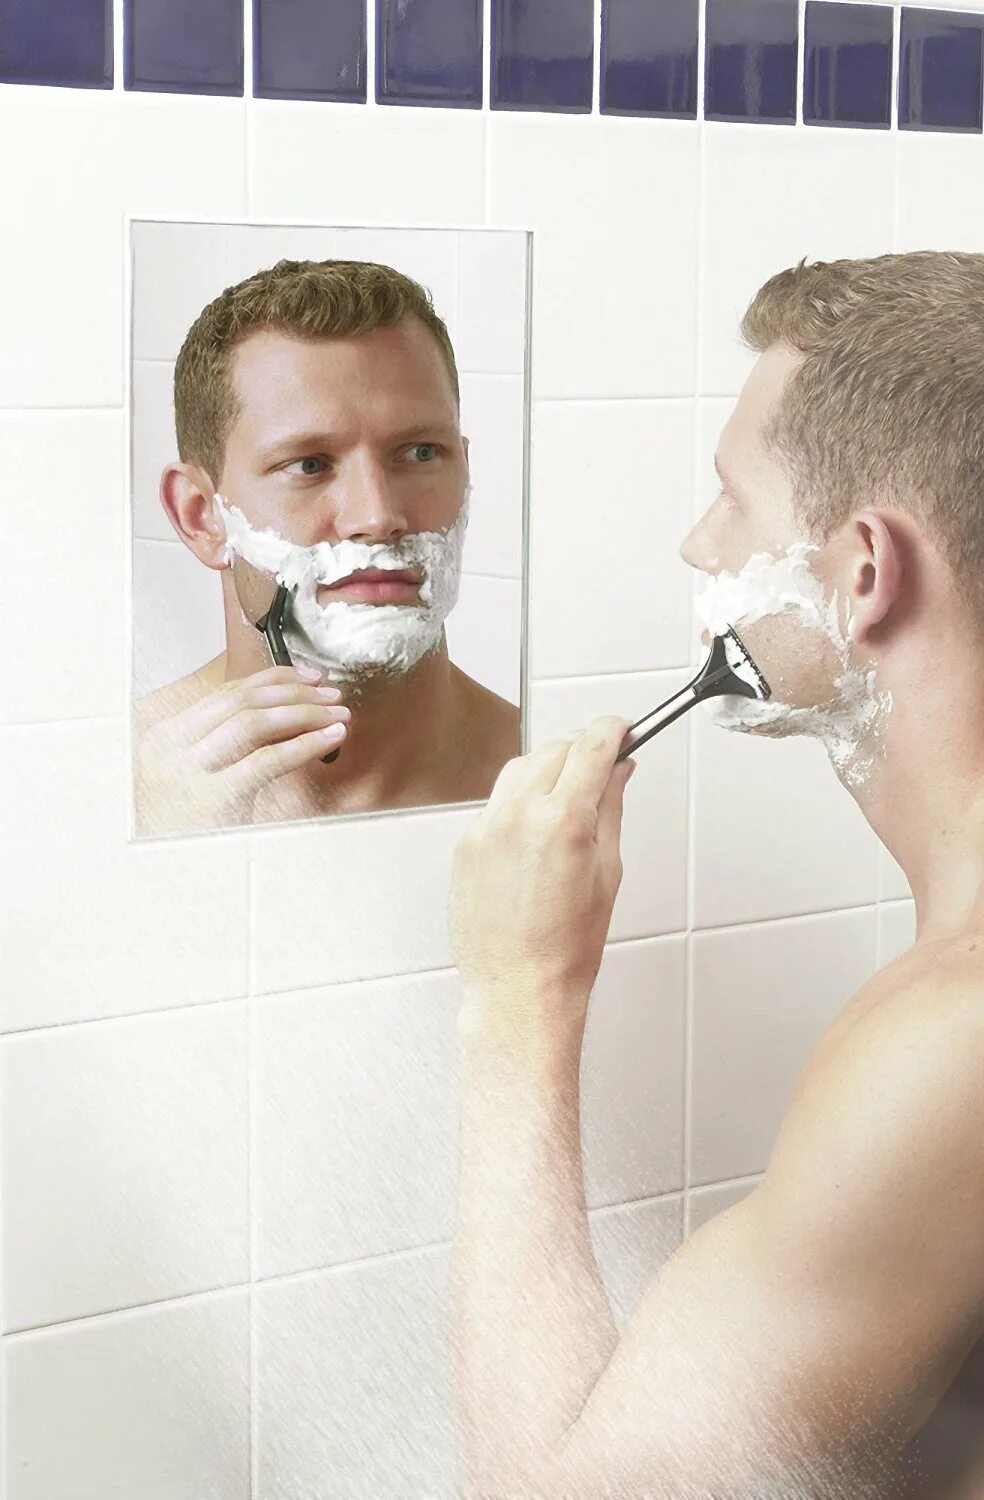 Мужчина бреется. Бородатый мужчина бреется. Парень бреет. Зеркало для мужчин для бритья. Мужчины бреет видео